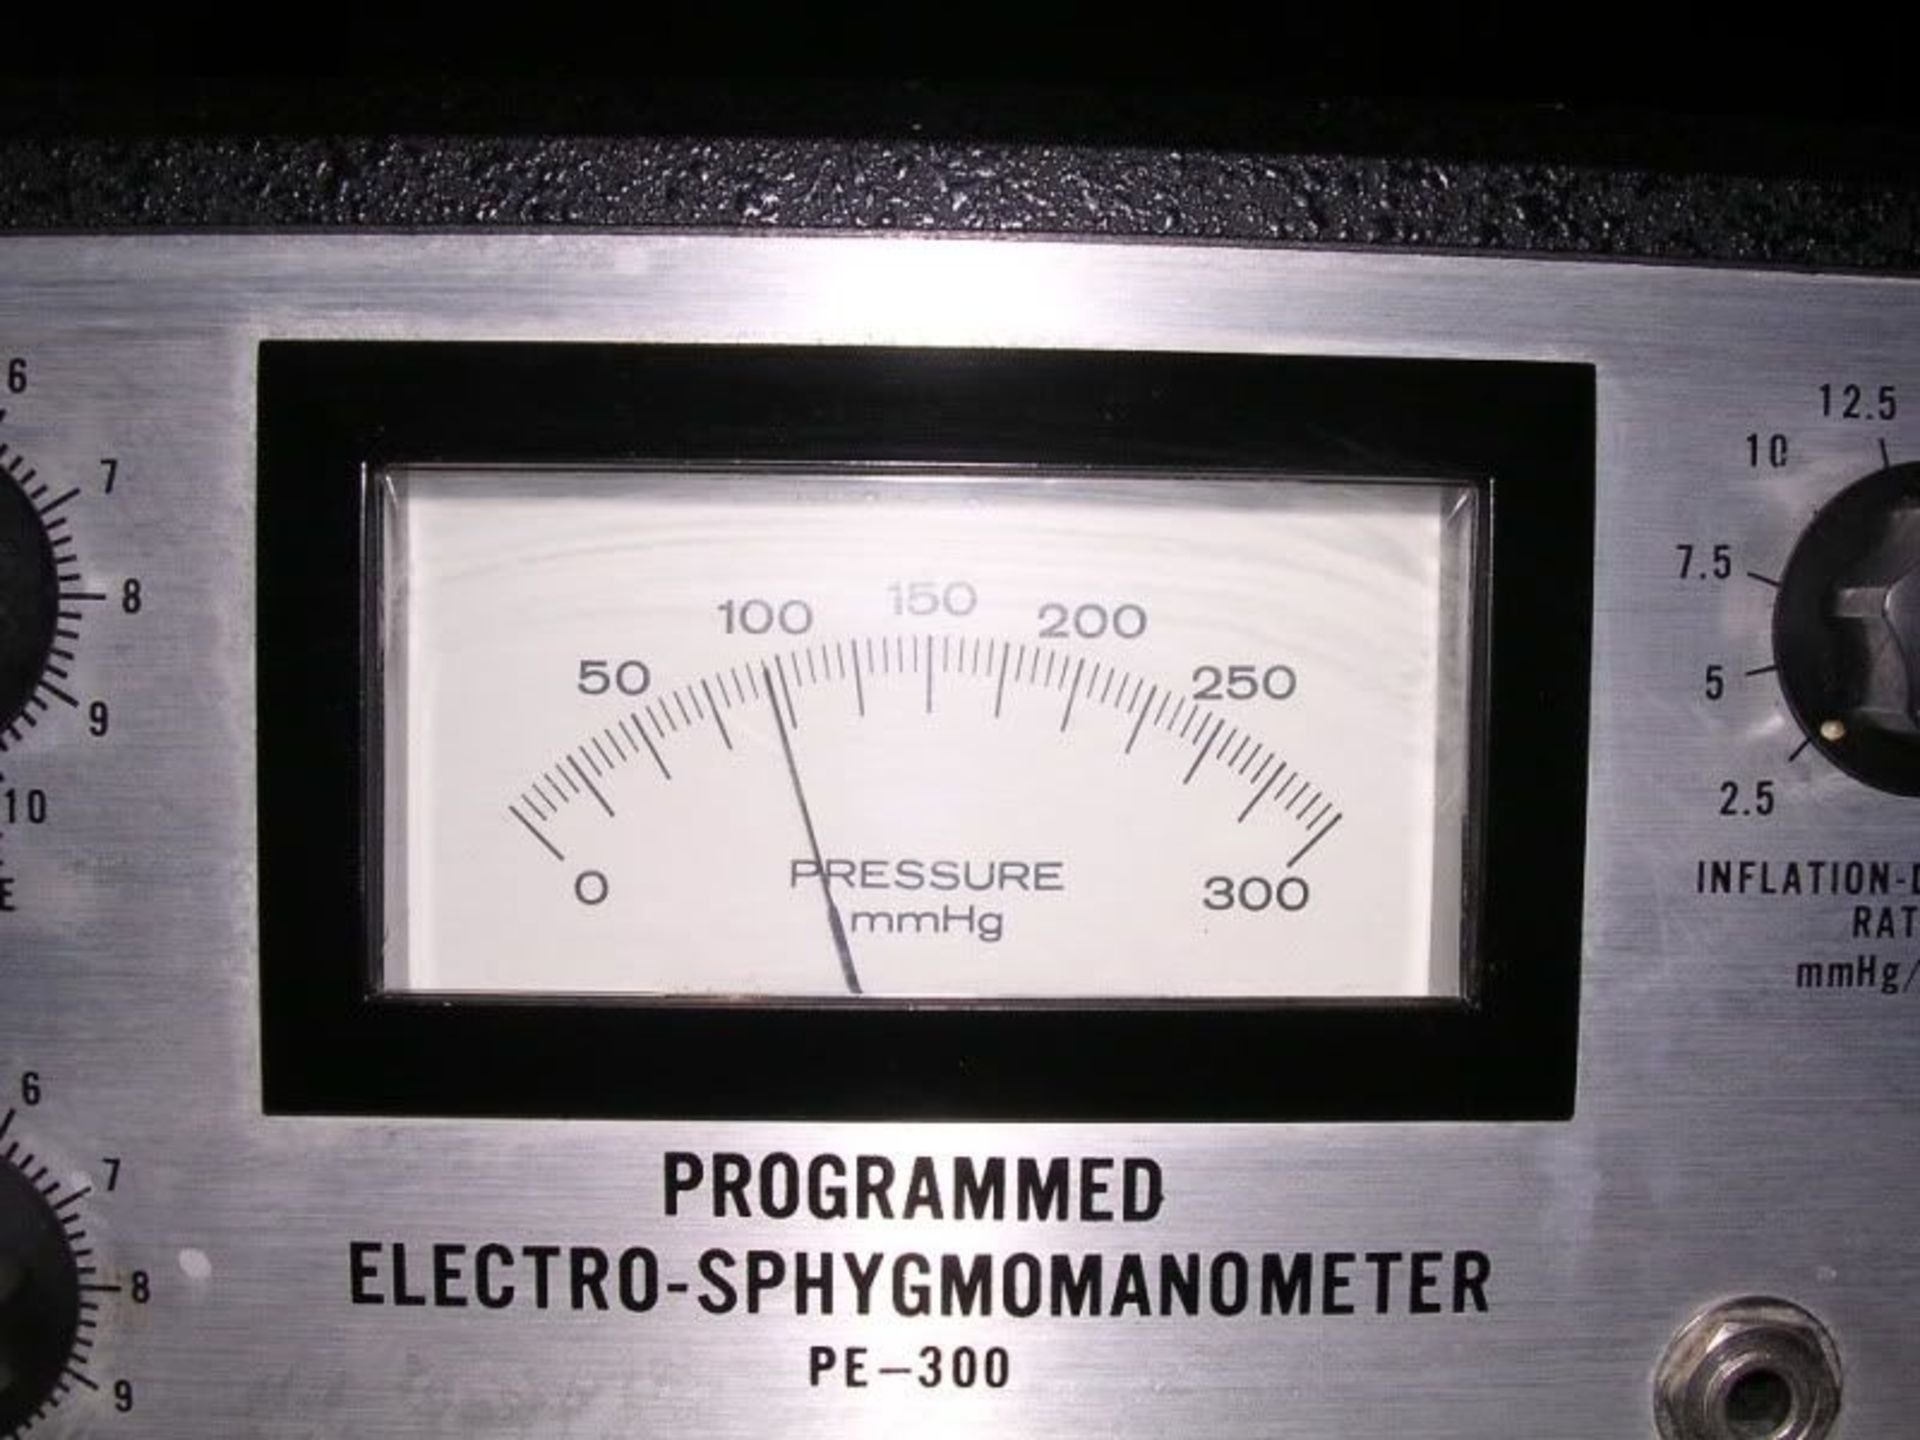 Narco Bio-Systems PE-300 Electro-Sphygmomanometer, Qty 1, 321462994631 - Image 2 of 5